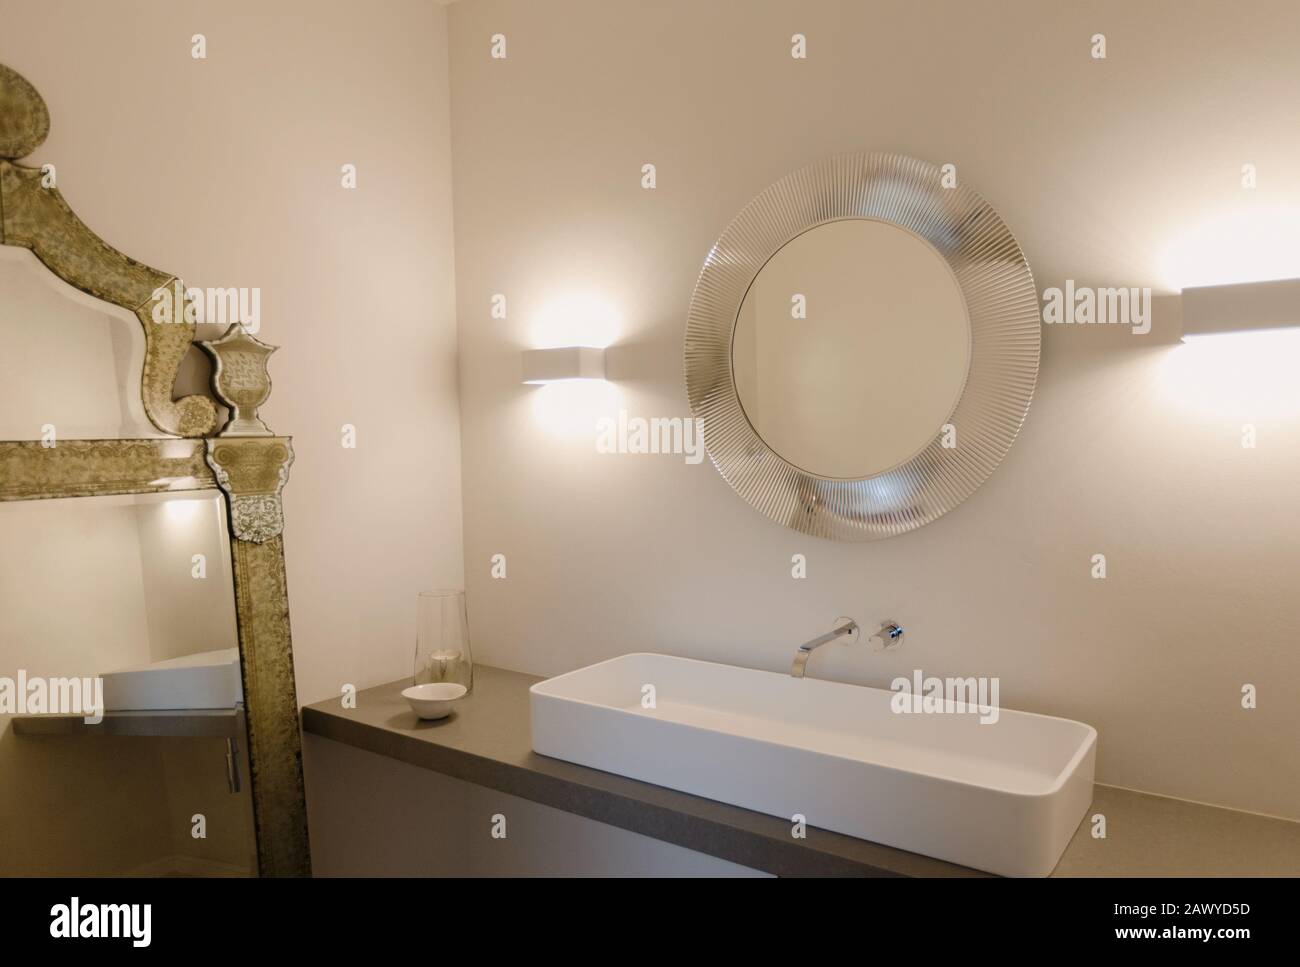 Home showcase interior bathroom sink and mirror Stock Photo